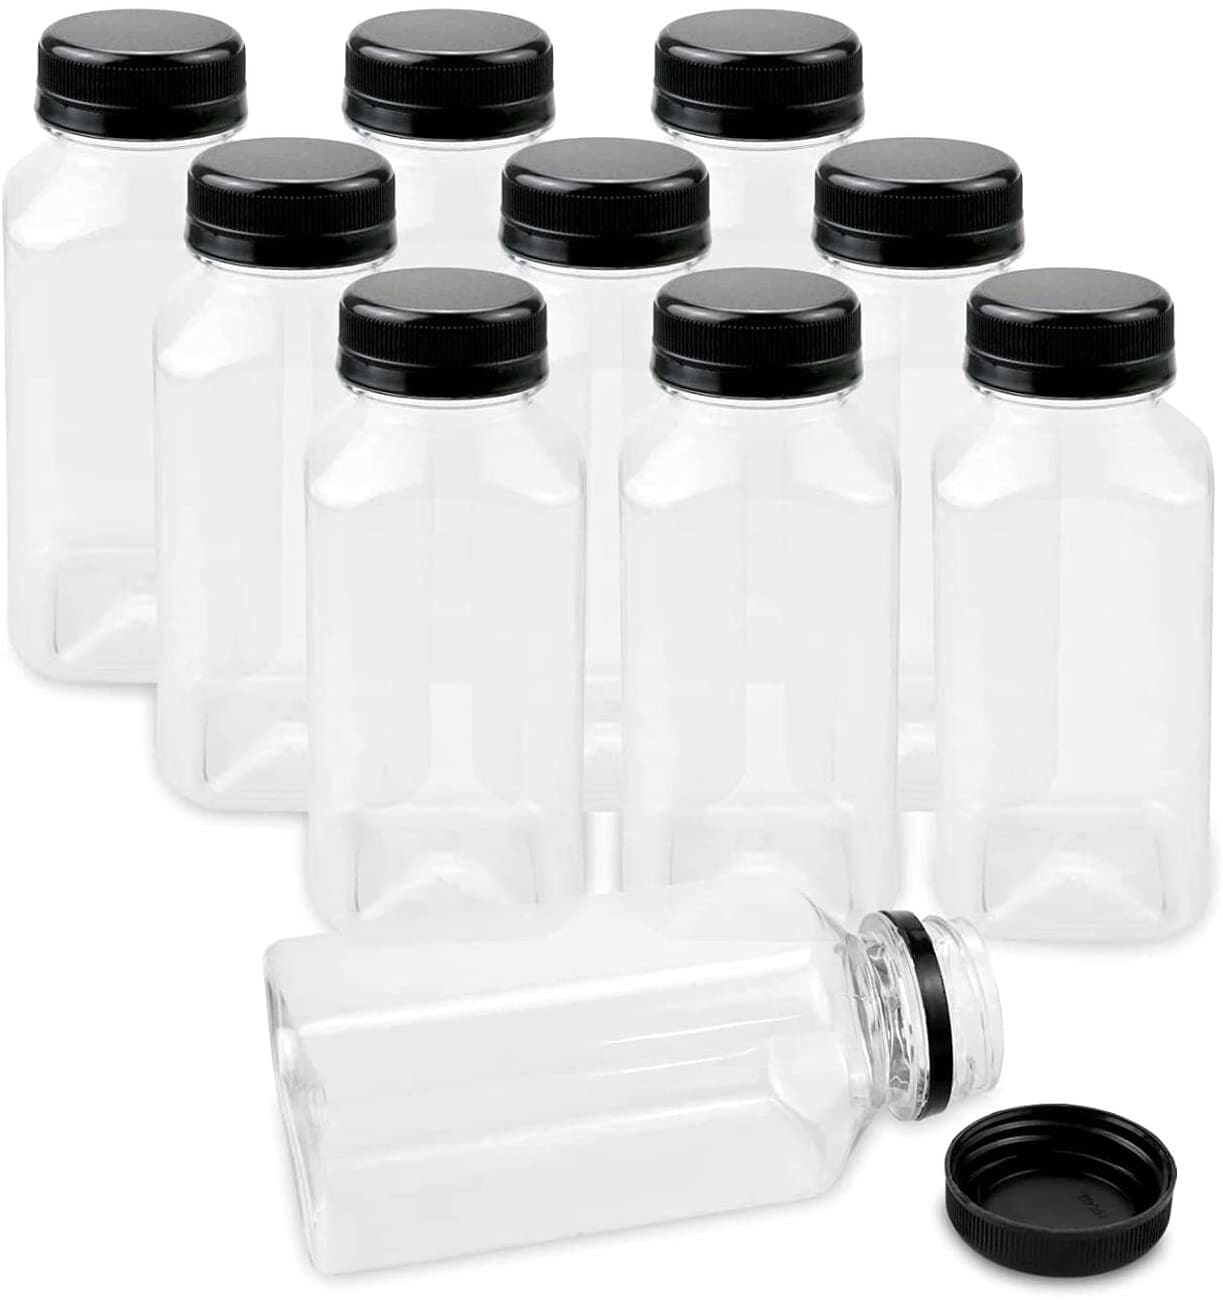 Empty Plastic Juice Bottles With White Tamper Evident Caps 8 Oz. 